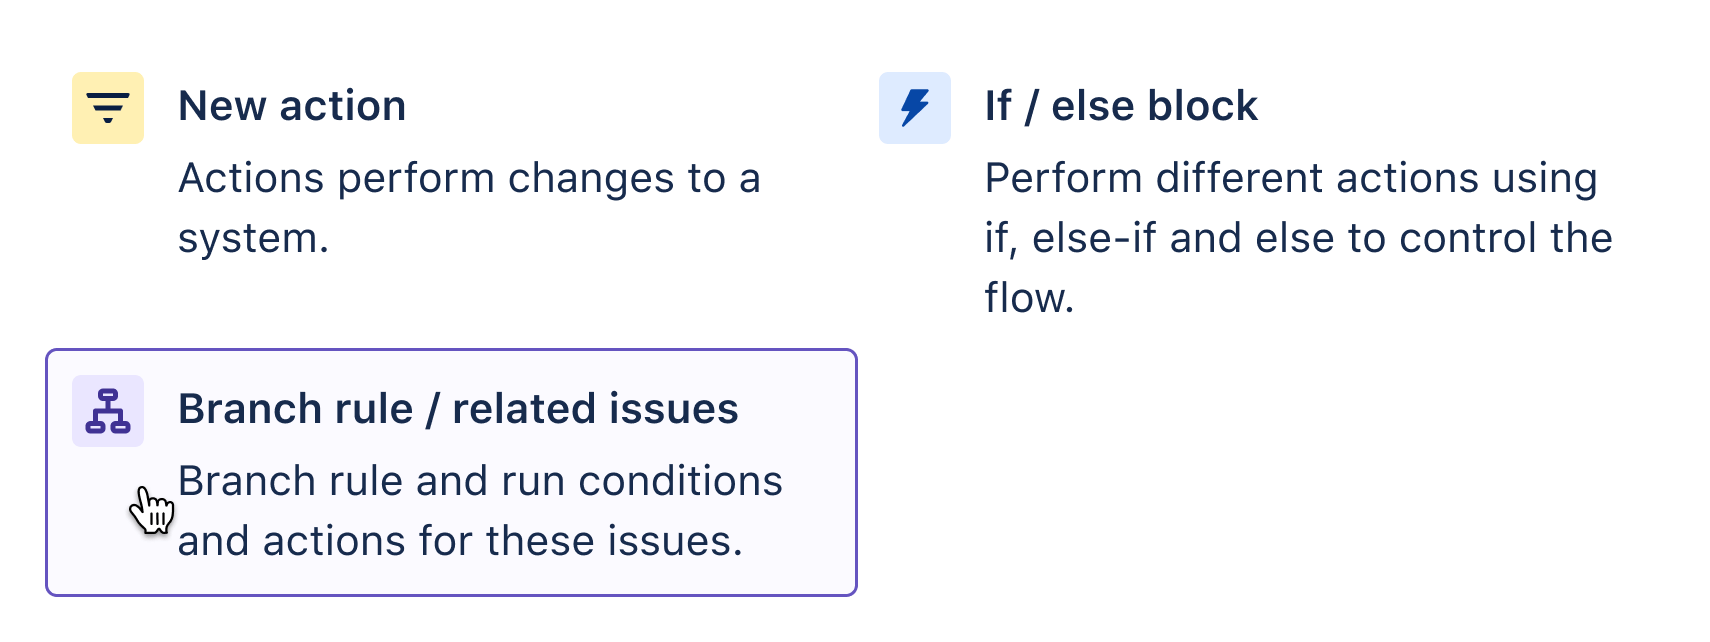 Добавление компонента Branch rule / related issues (Ветка правила/связанные задачи)